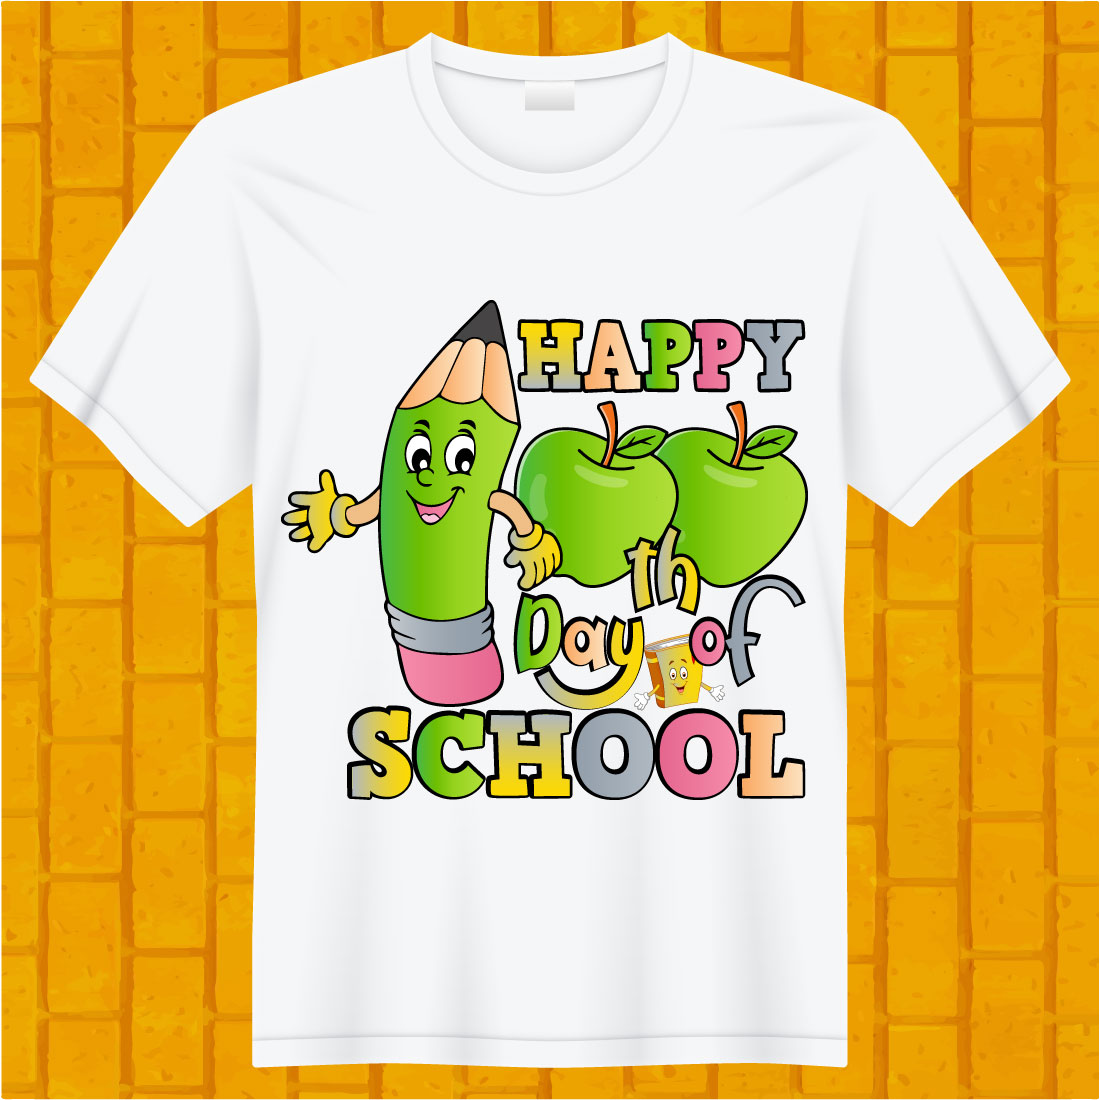 Happy School Design SVG Bundle preview image.